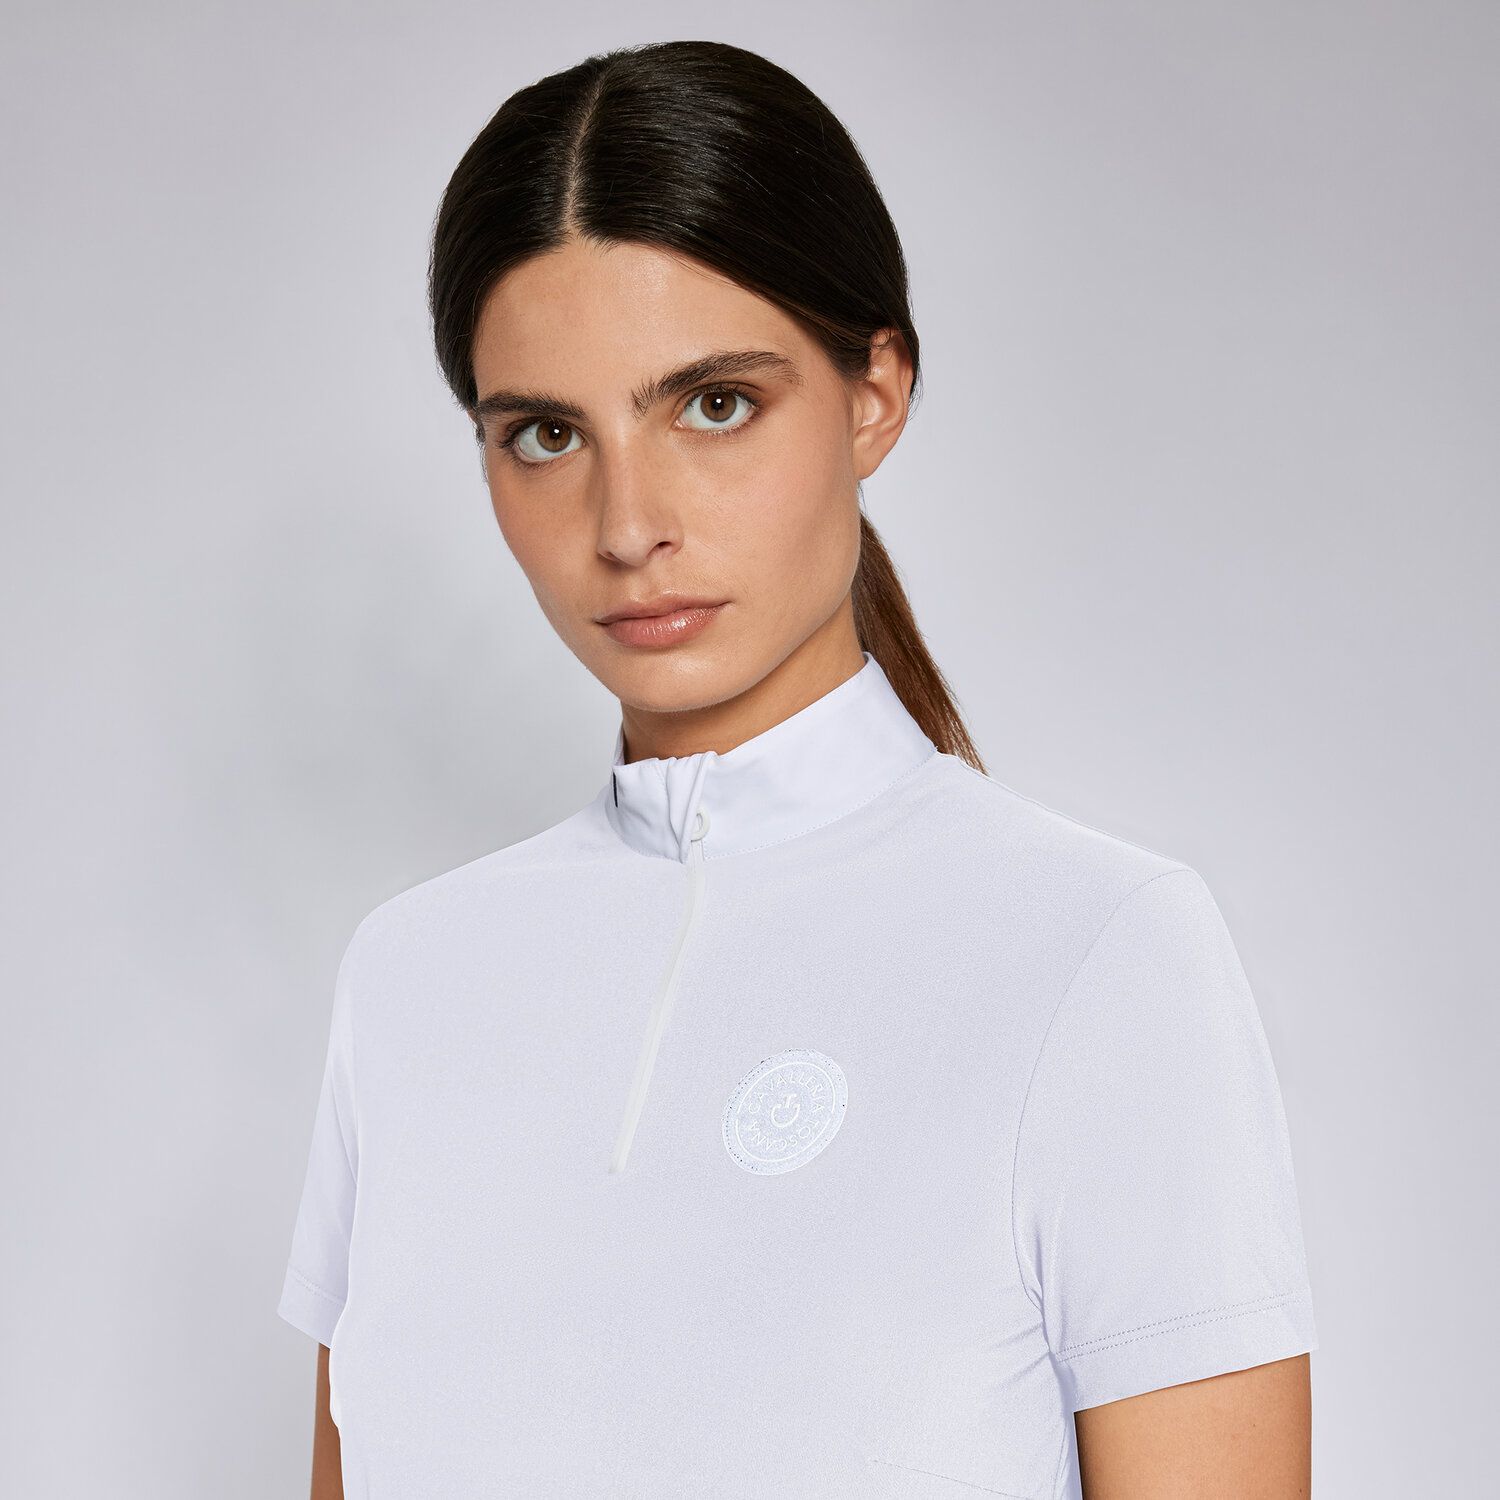 Cavalleria Toscana Women's competition polo shirt WHITE-3